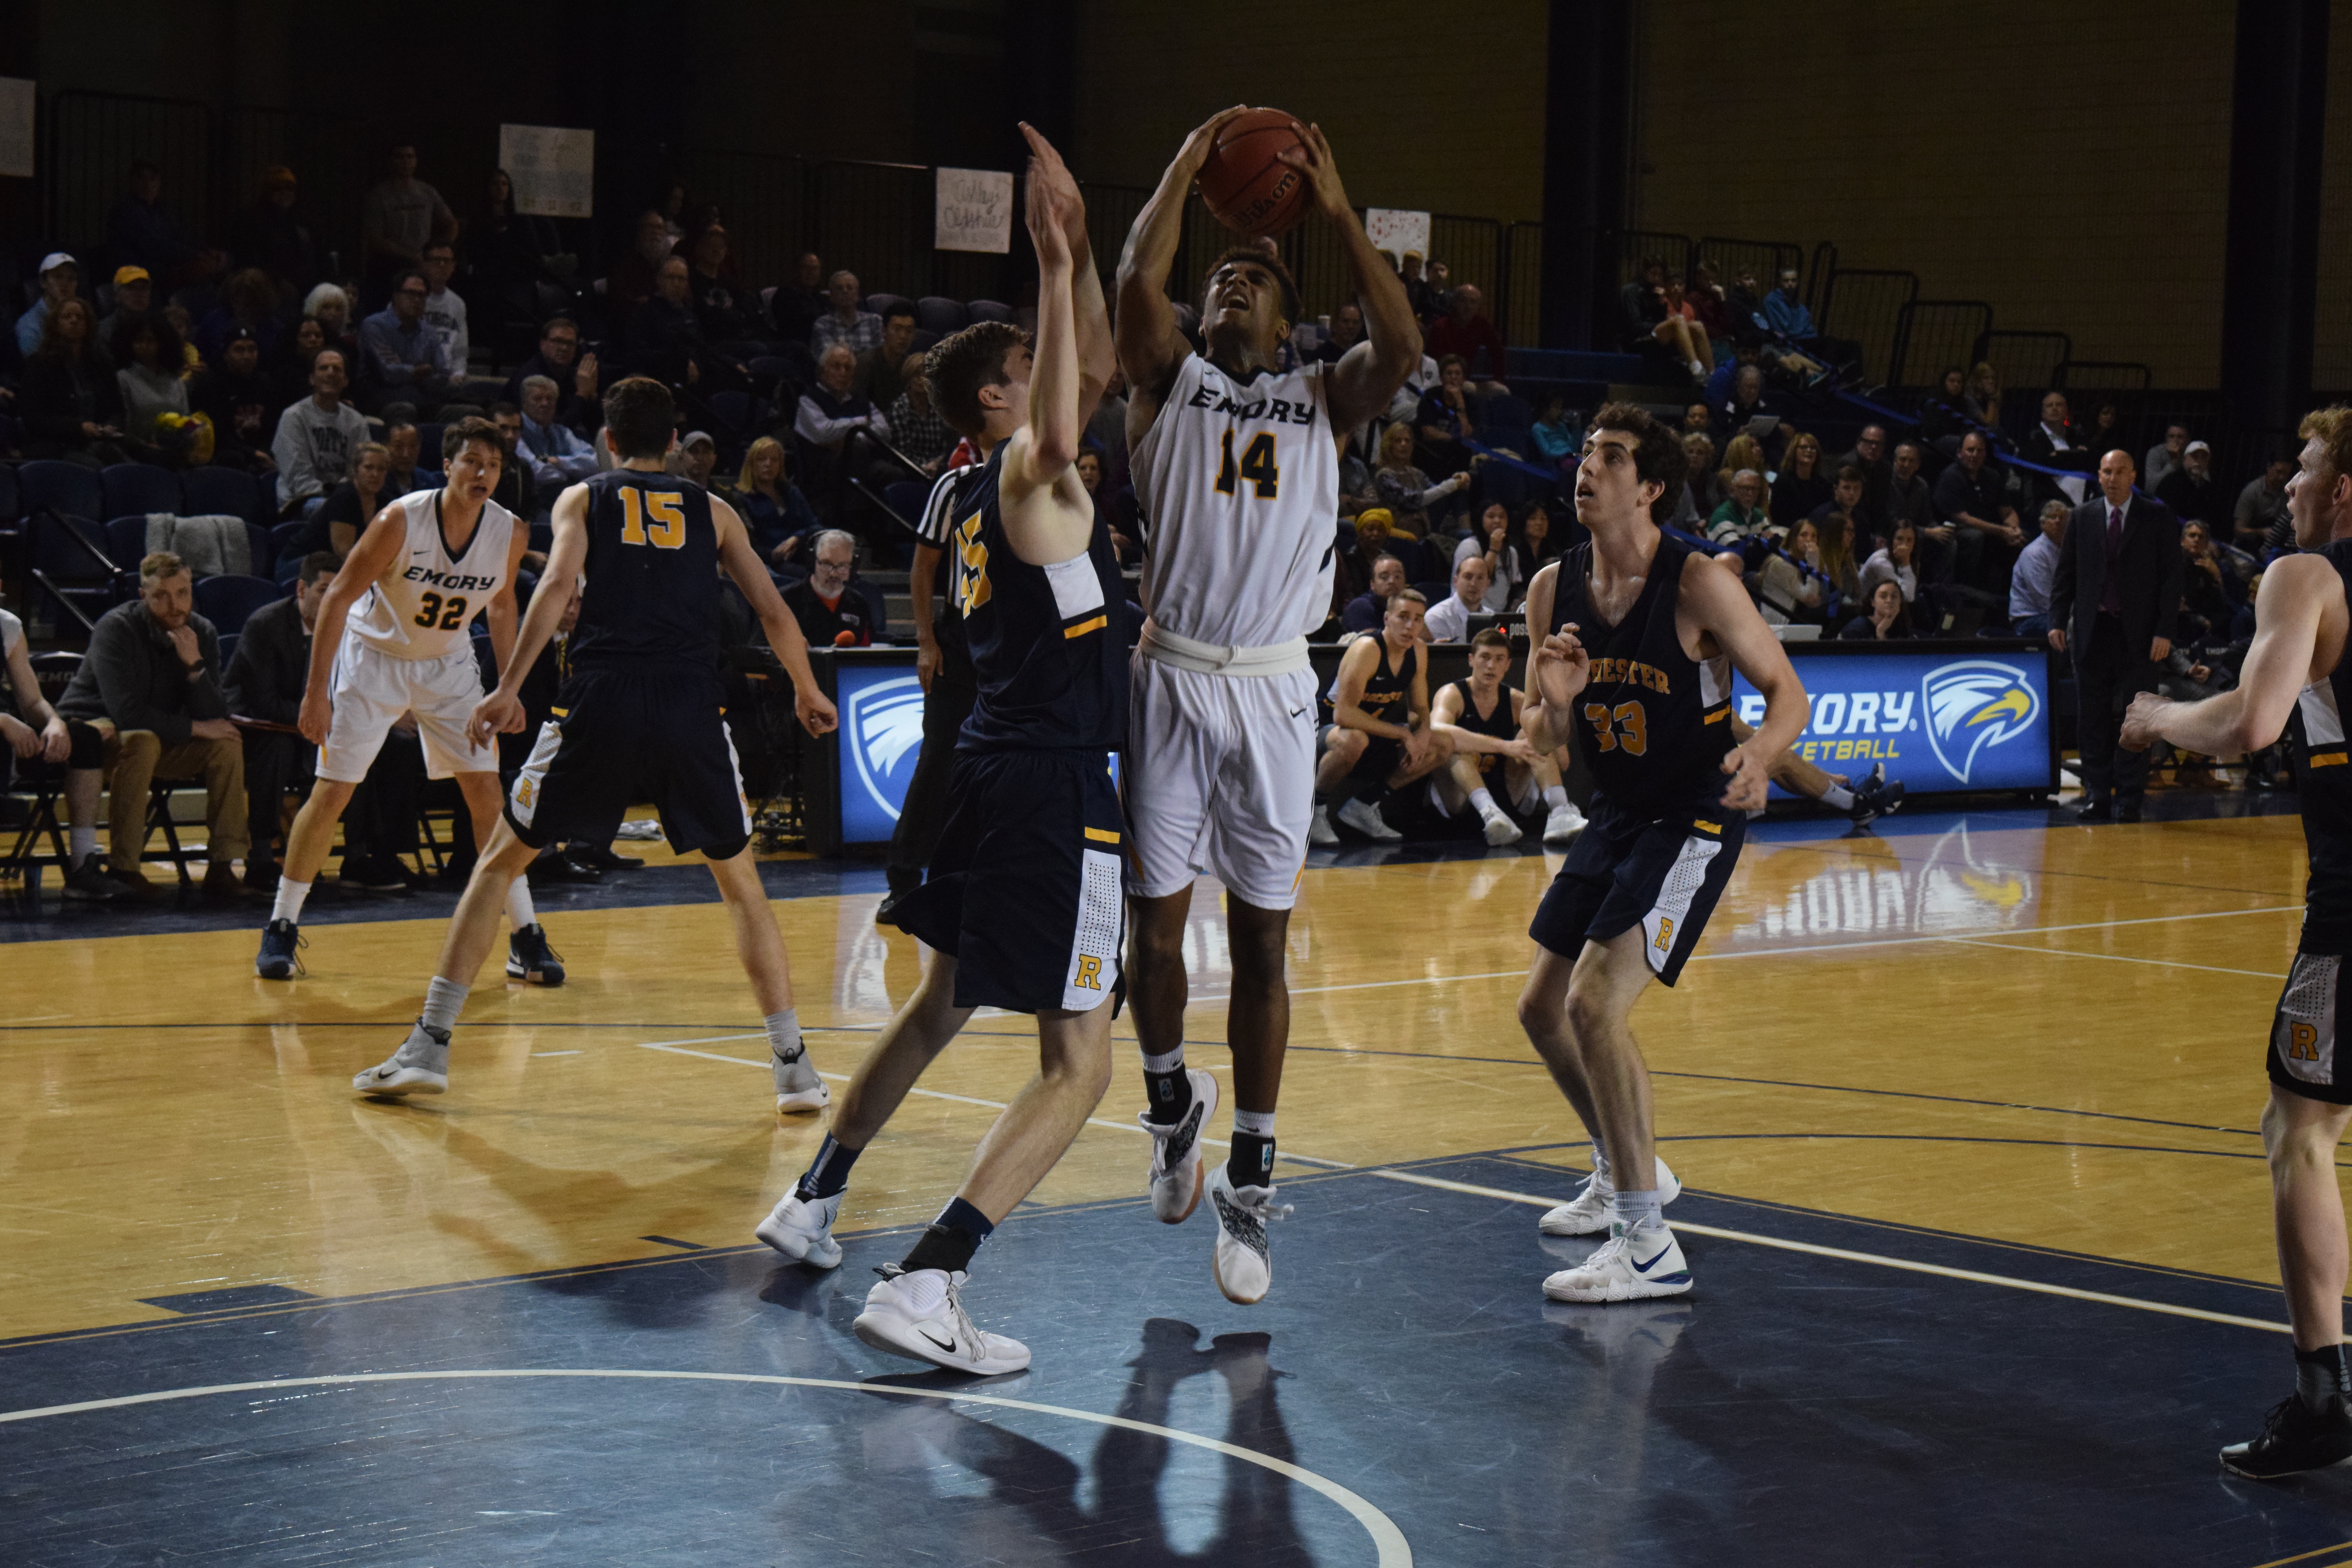 Emory basketball alumnus Lawrence Rowley shoots his shot, scores coaching position at Princeton